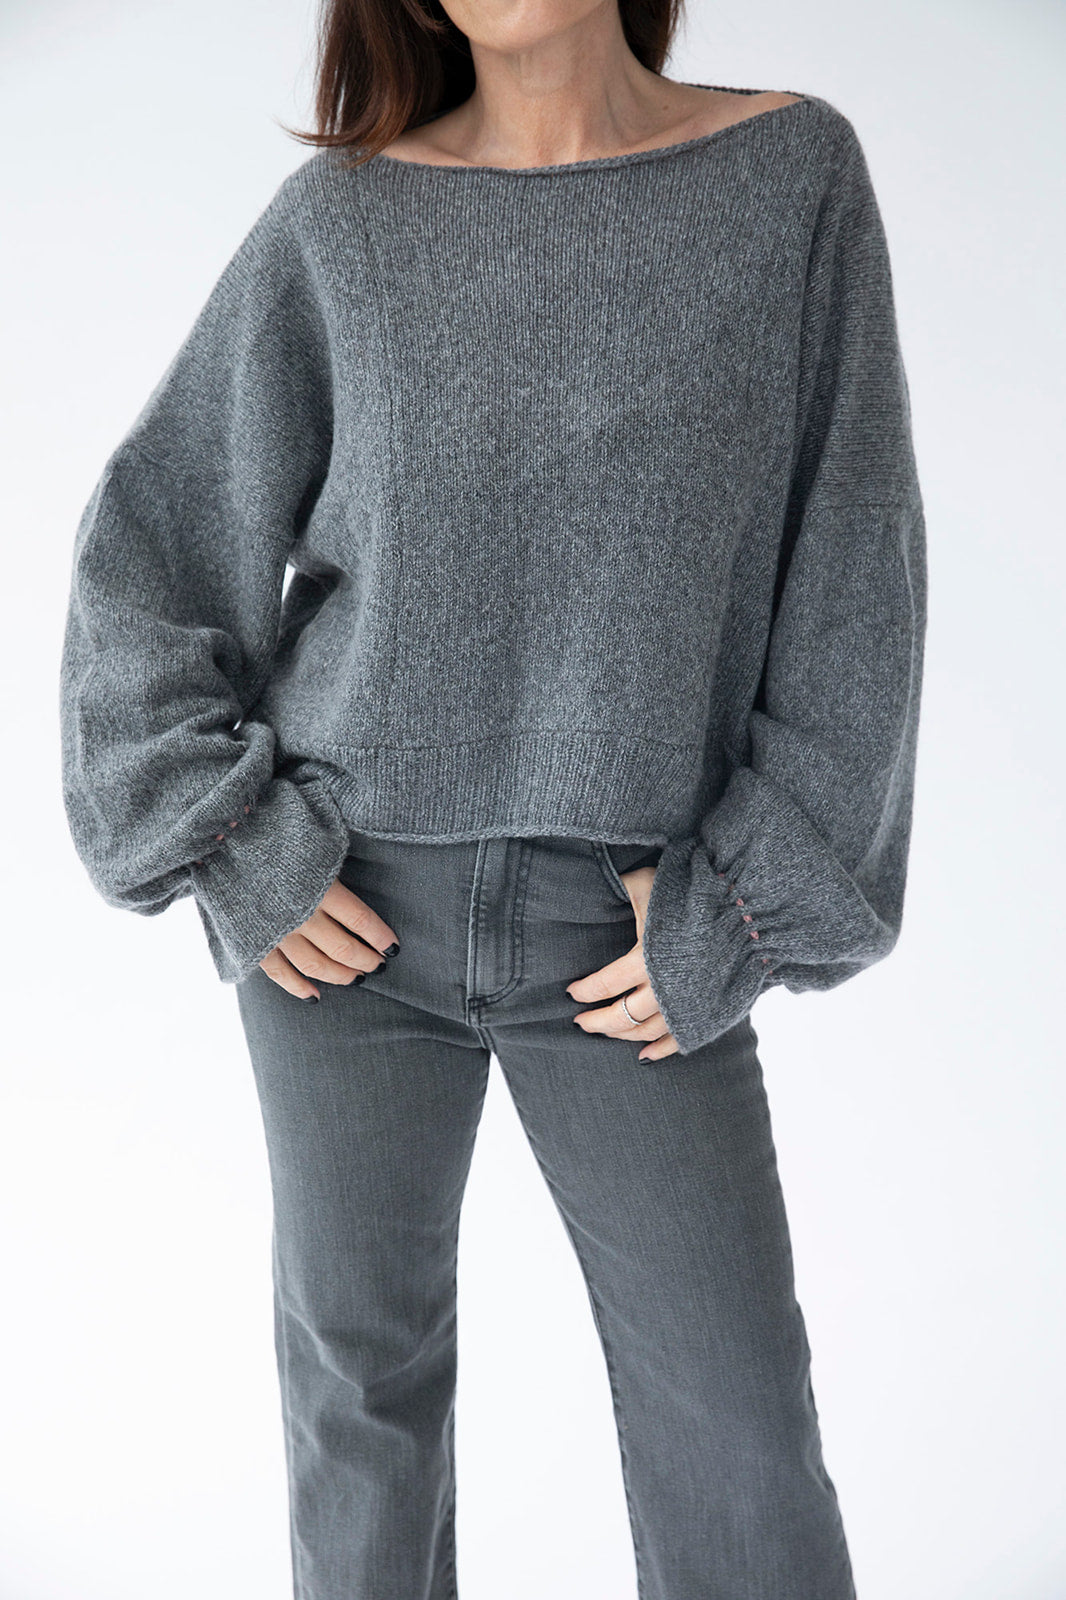 souchi Stretch Pullover Sweater